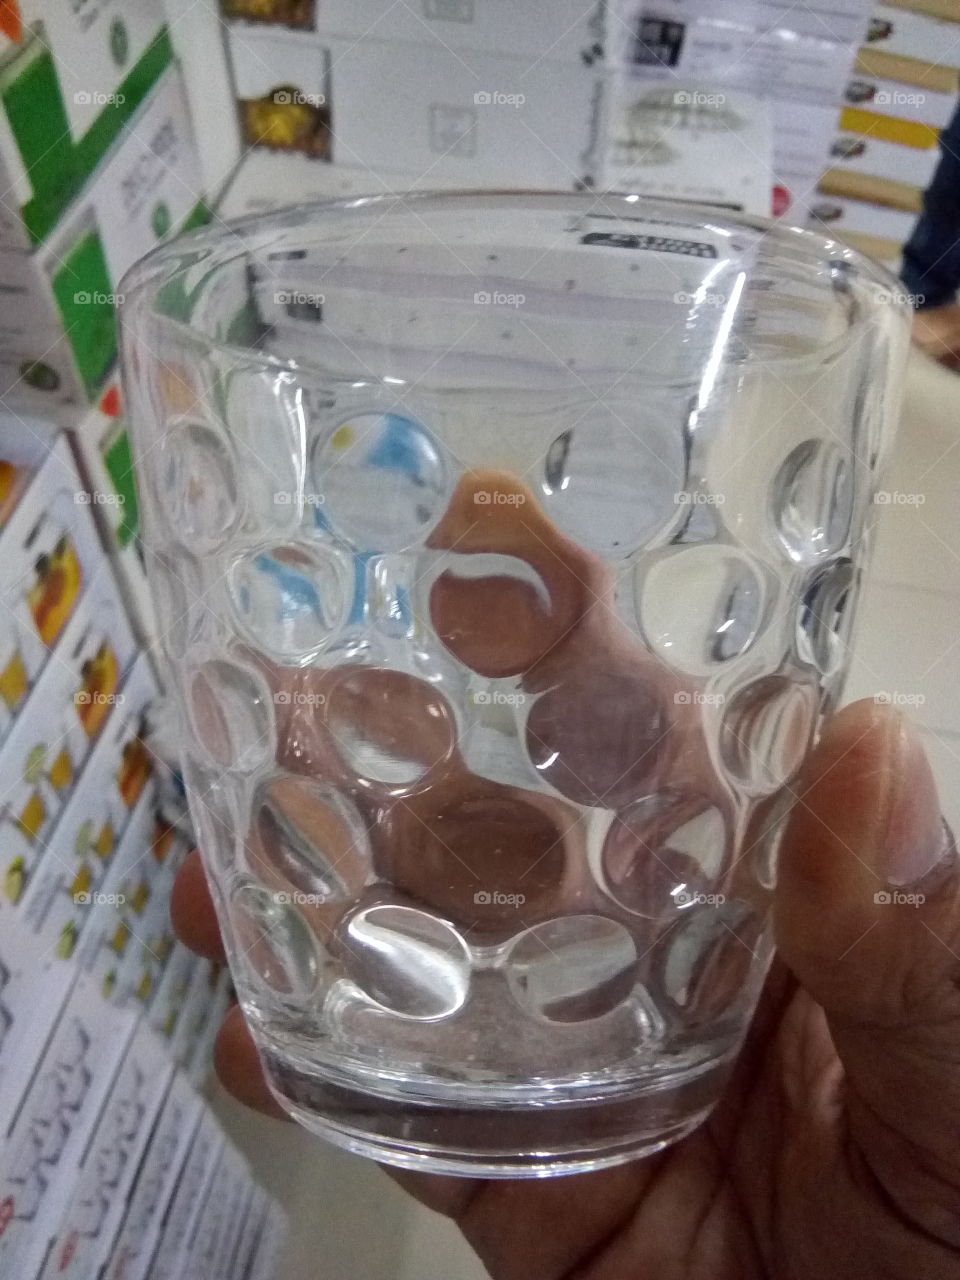 A beautiful designer glass.